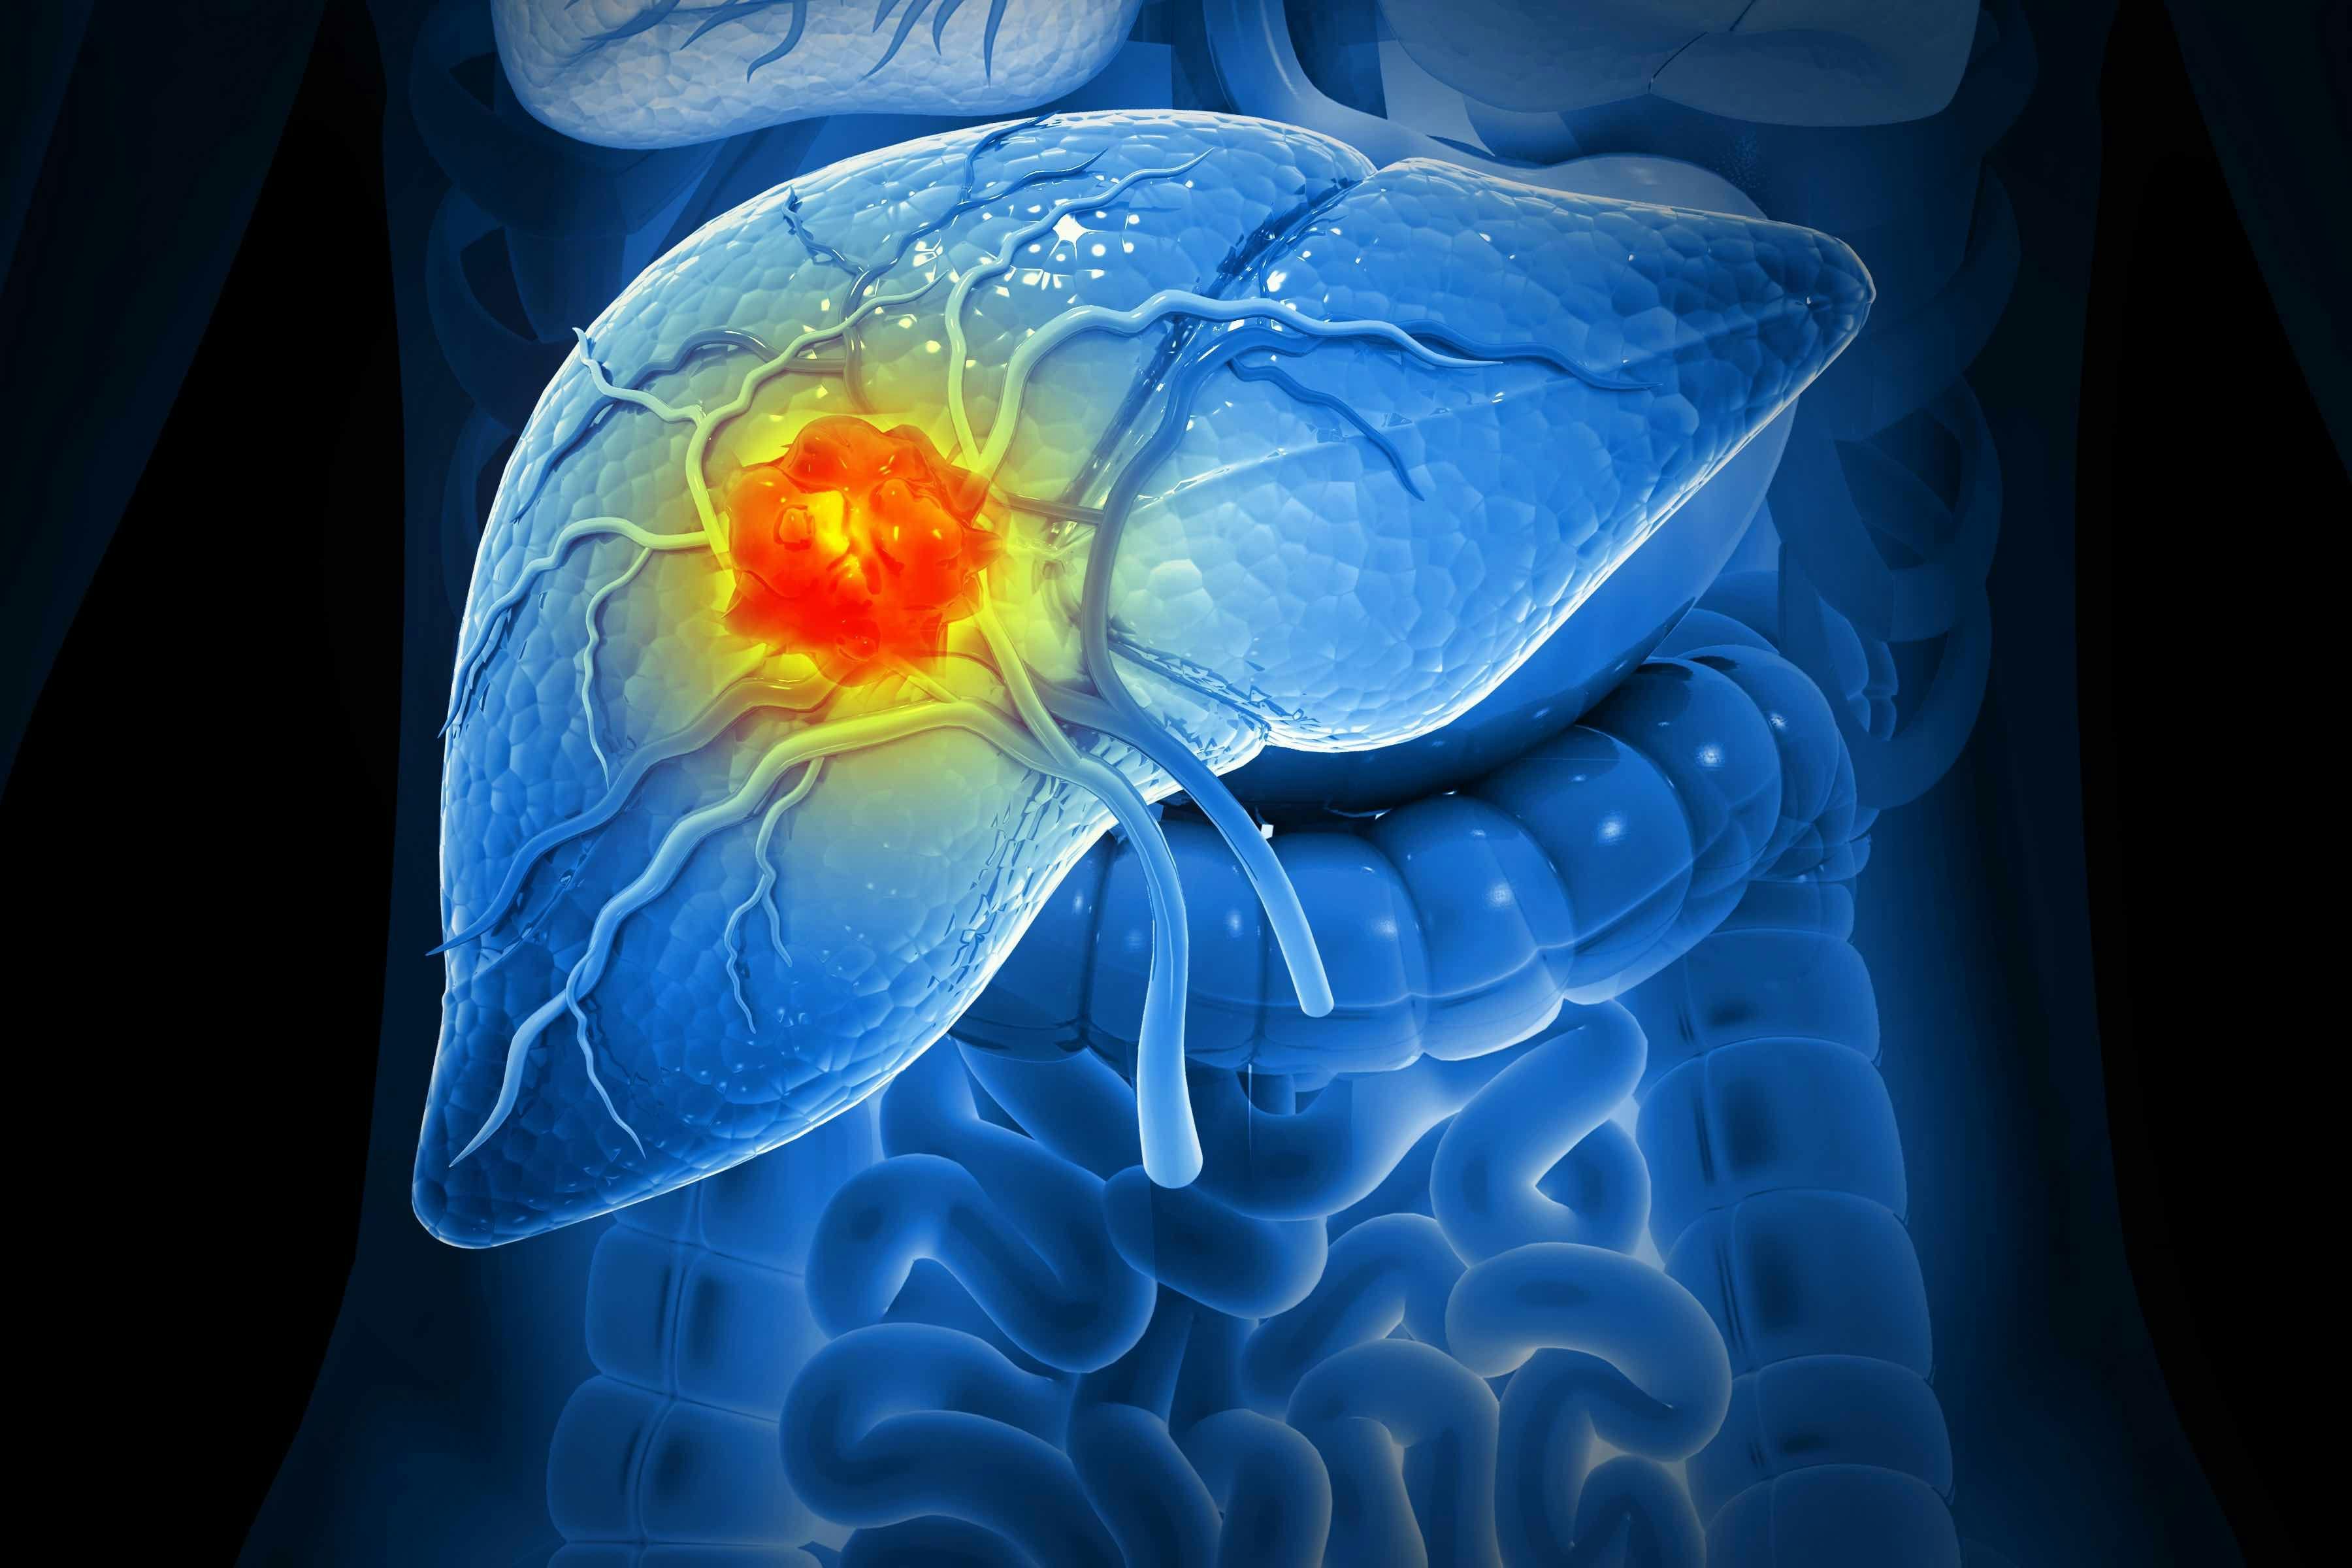 Hepatocellular carcinoma illustration | Image credit: Crystal light - stock.adobe.com